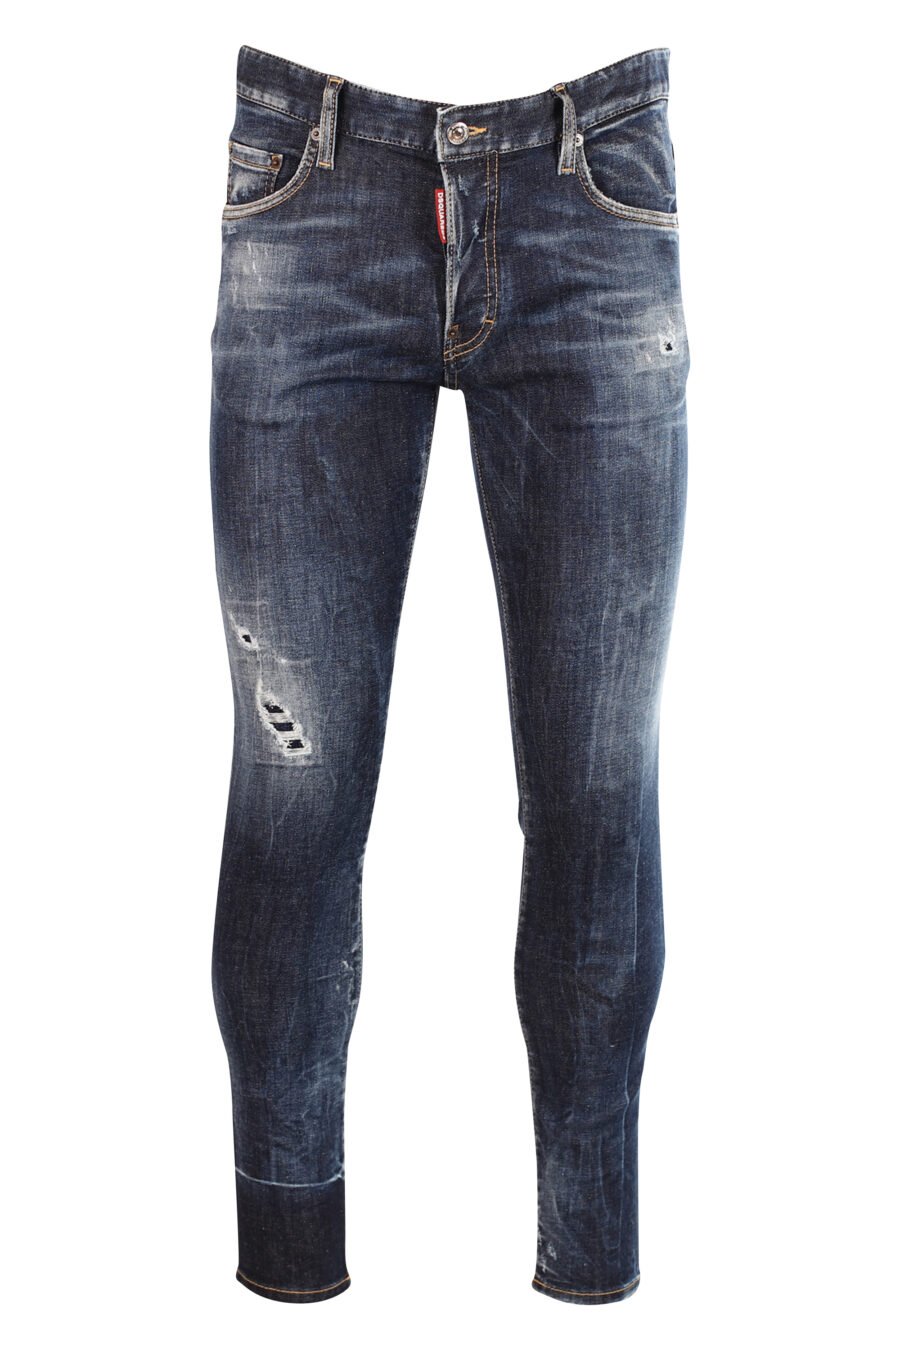 Jeans "super twinkey jean" blau mit Rissen - 8052134966914